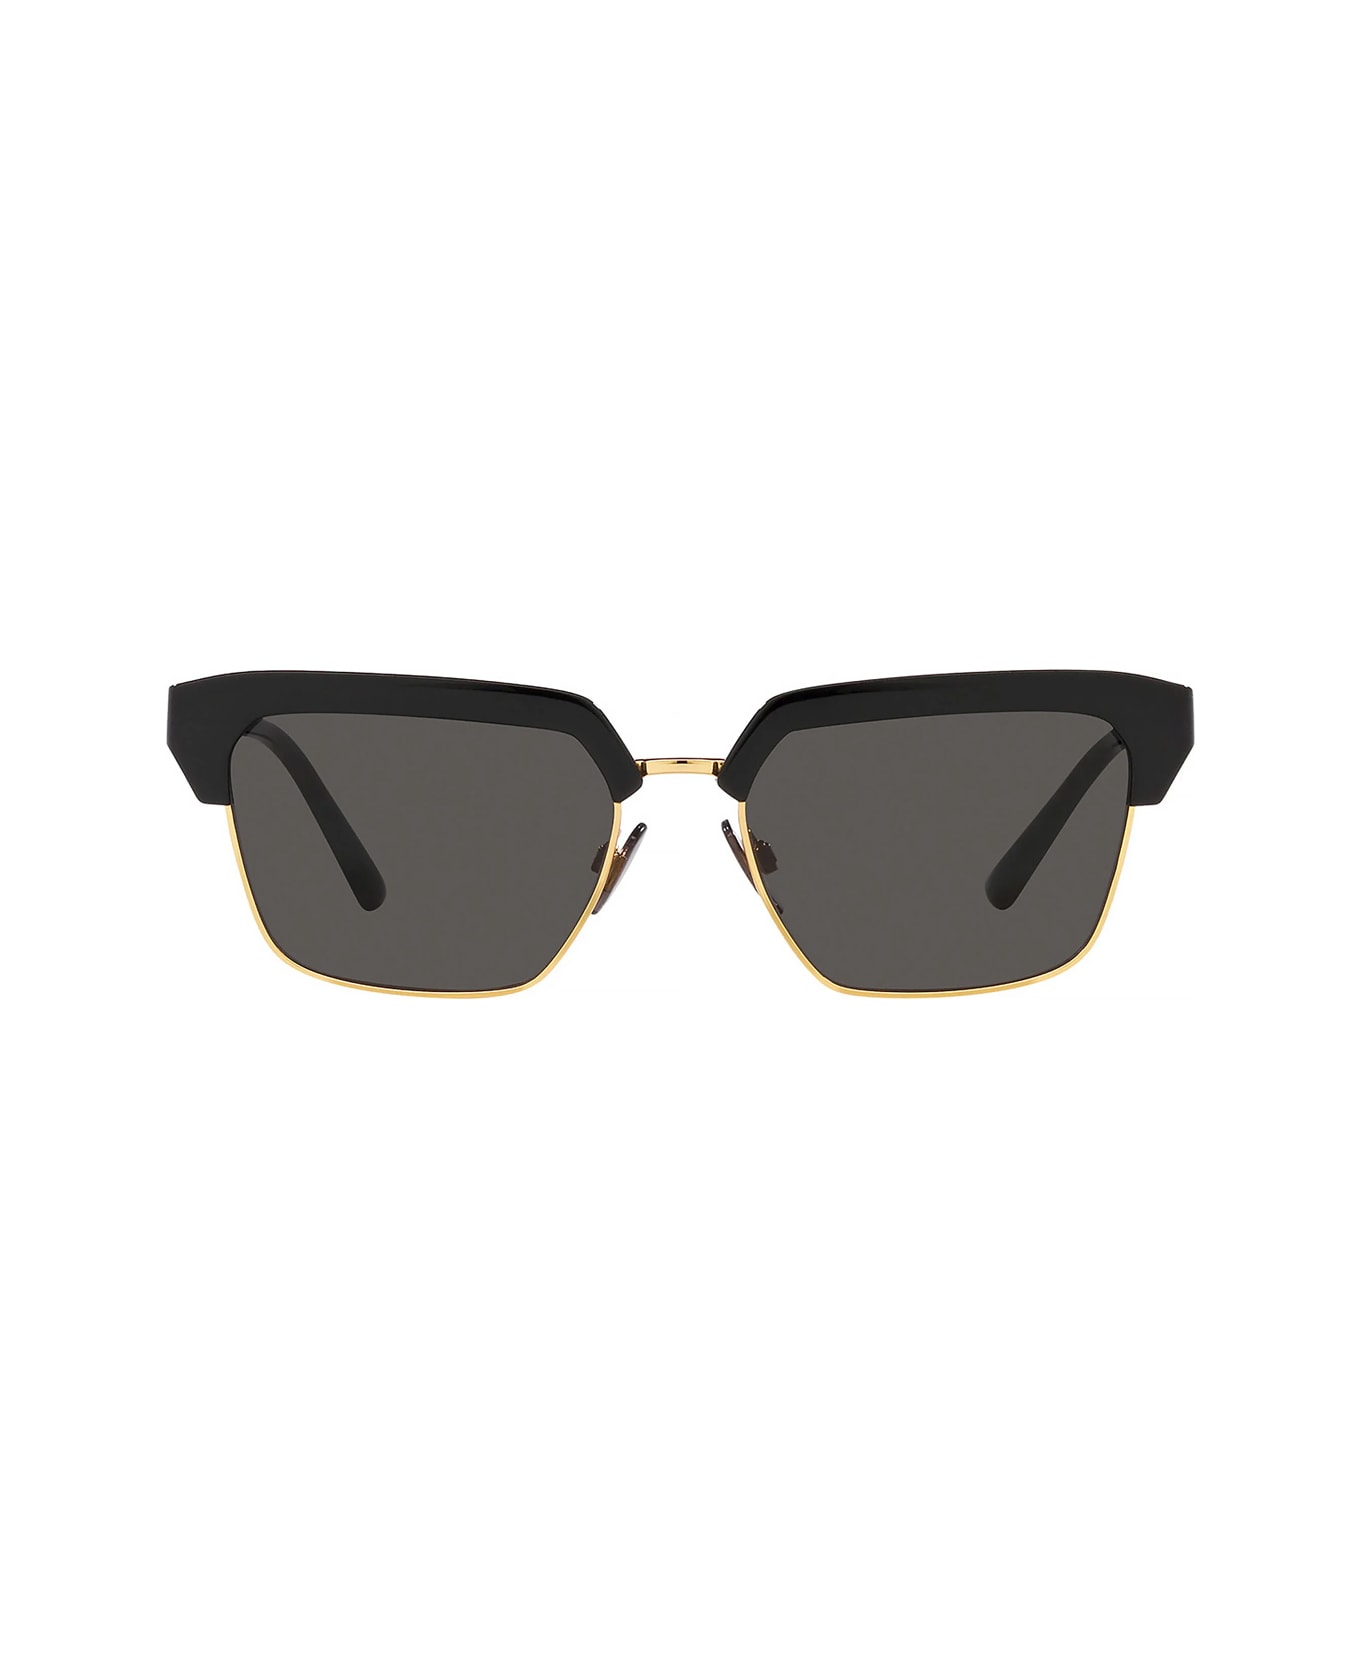 Dolce & Gabbana Eyewear Dg6185 501/87 Sunglasses - Nero